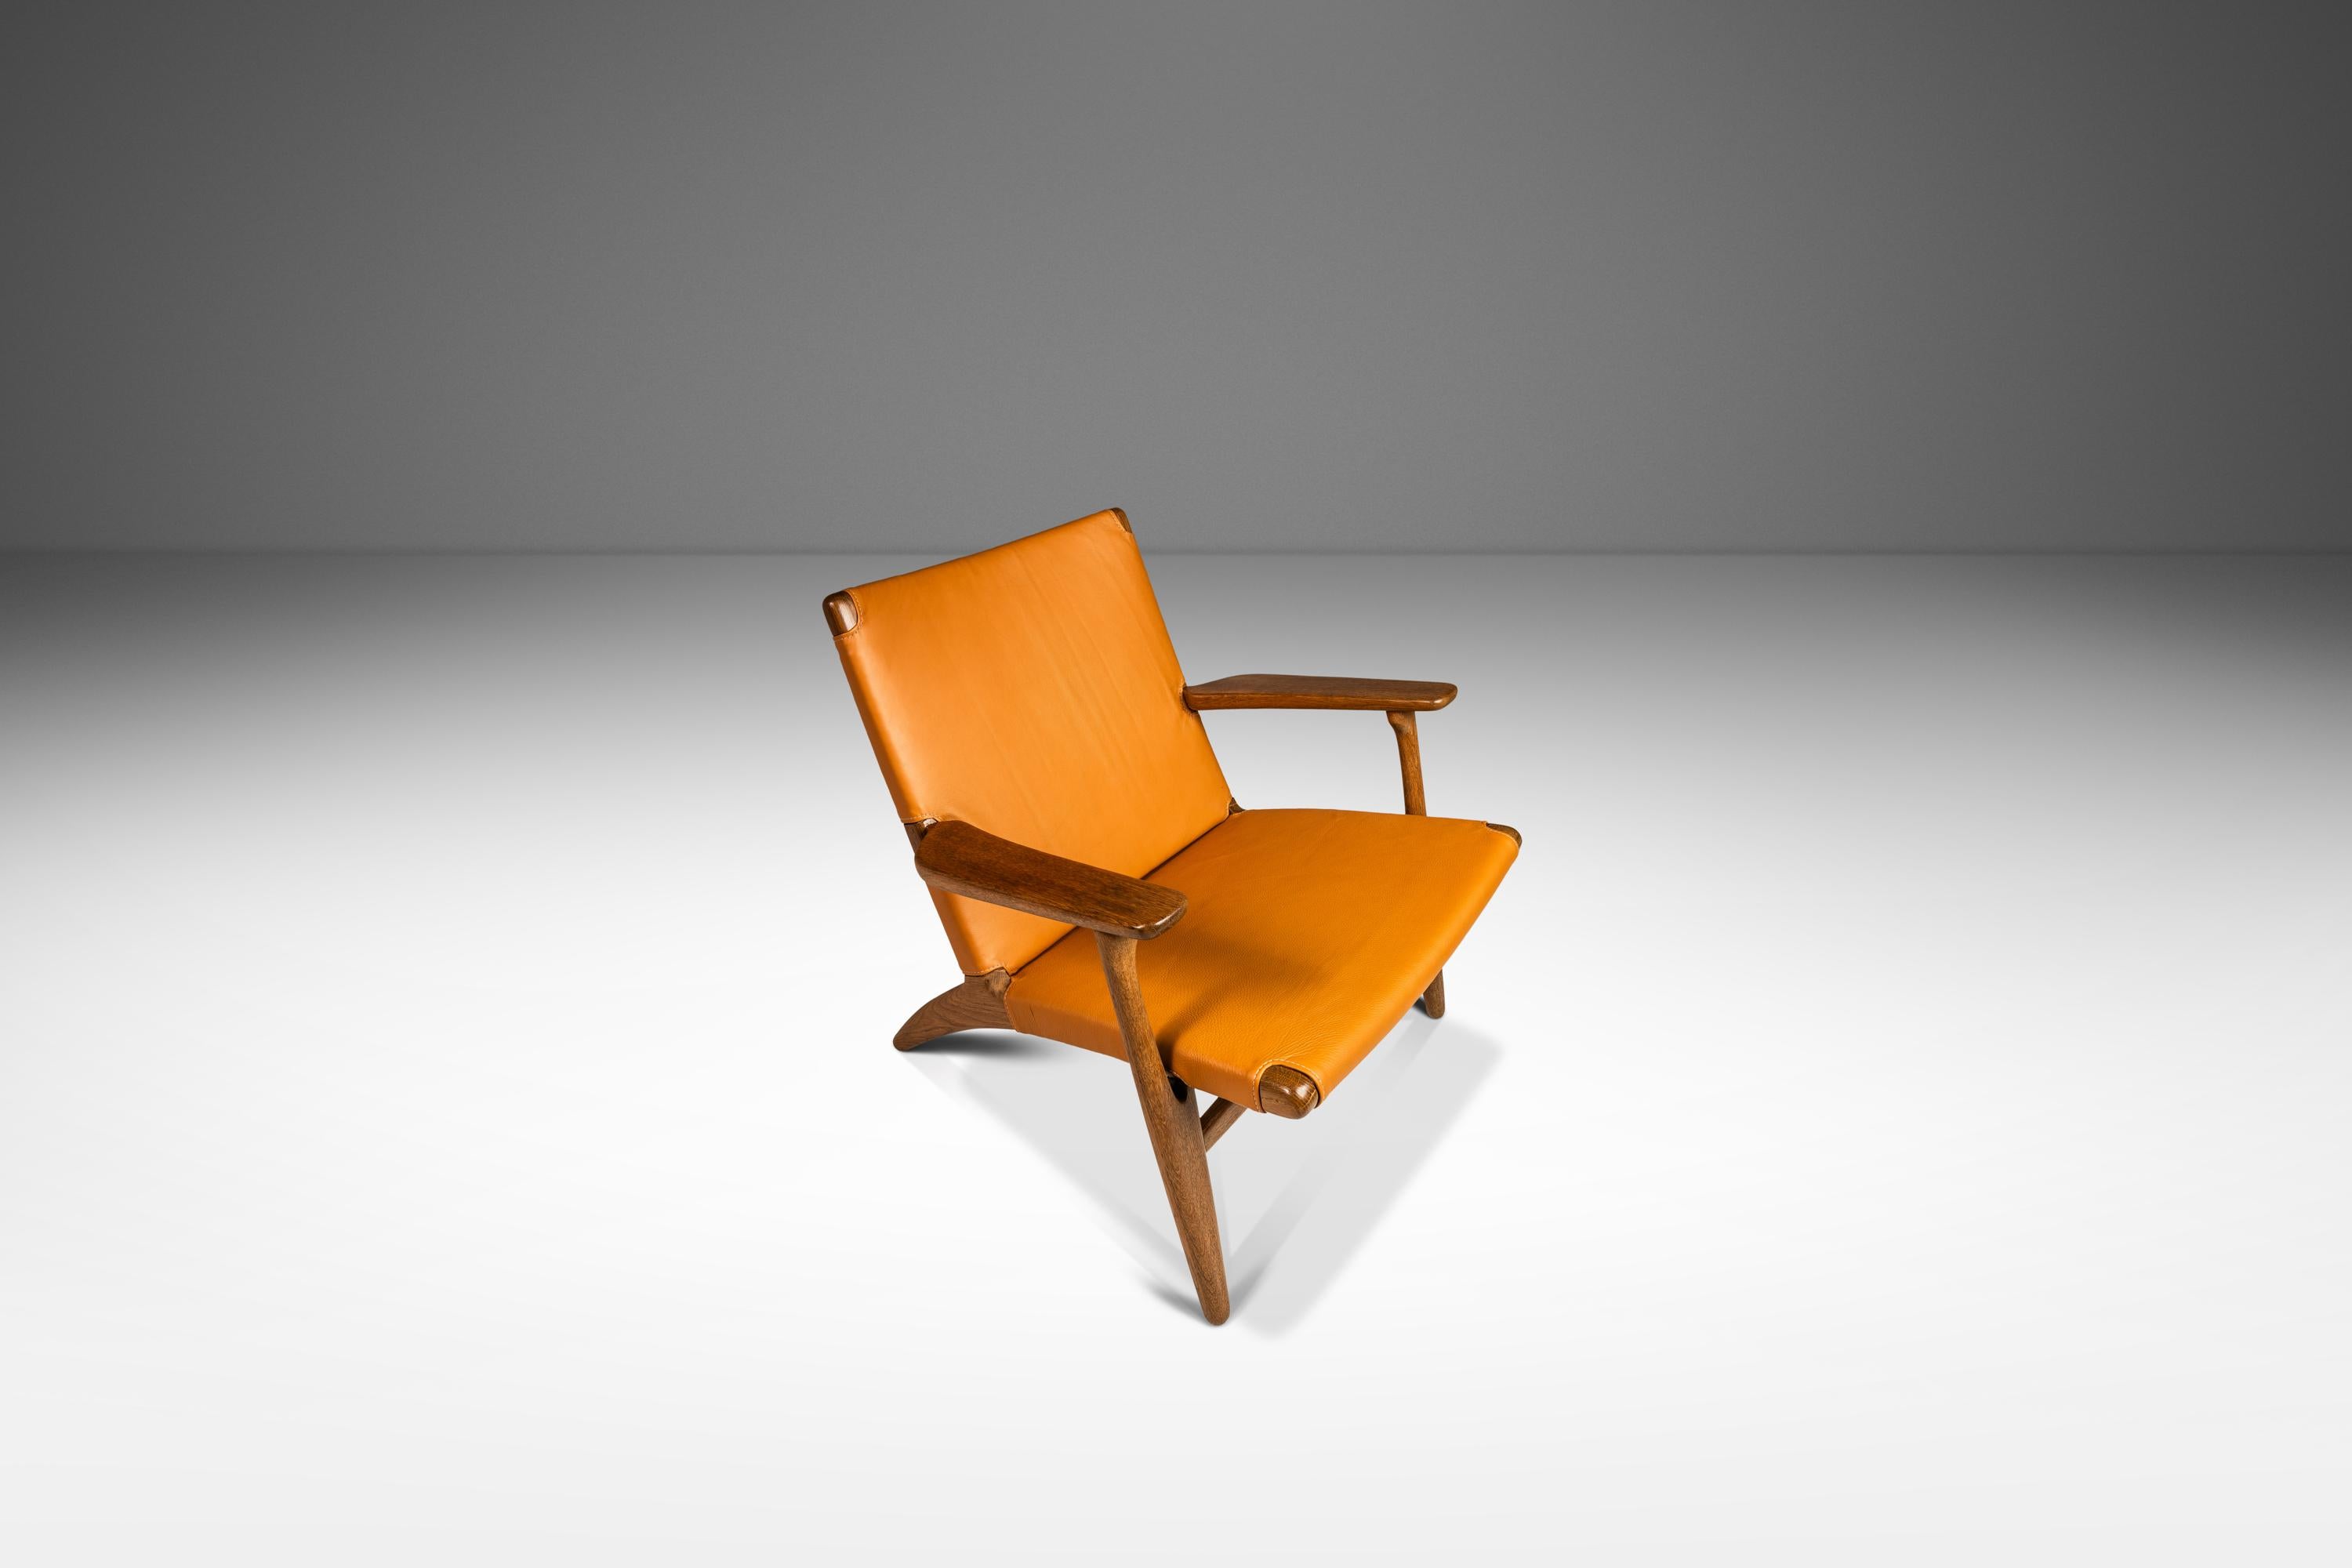  Danish Mid-Century CH 25 Lounge Chair by Hans J. Wegner, Oak & Leather, c. 1950 For Sale 6